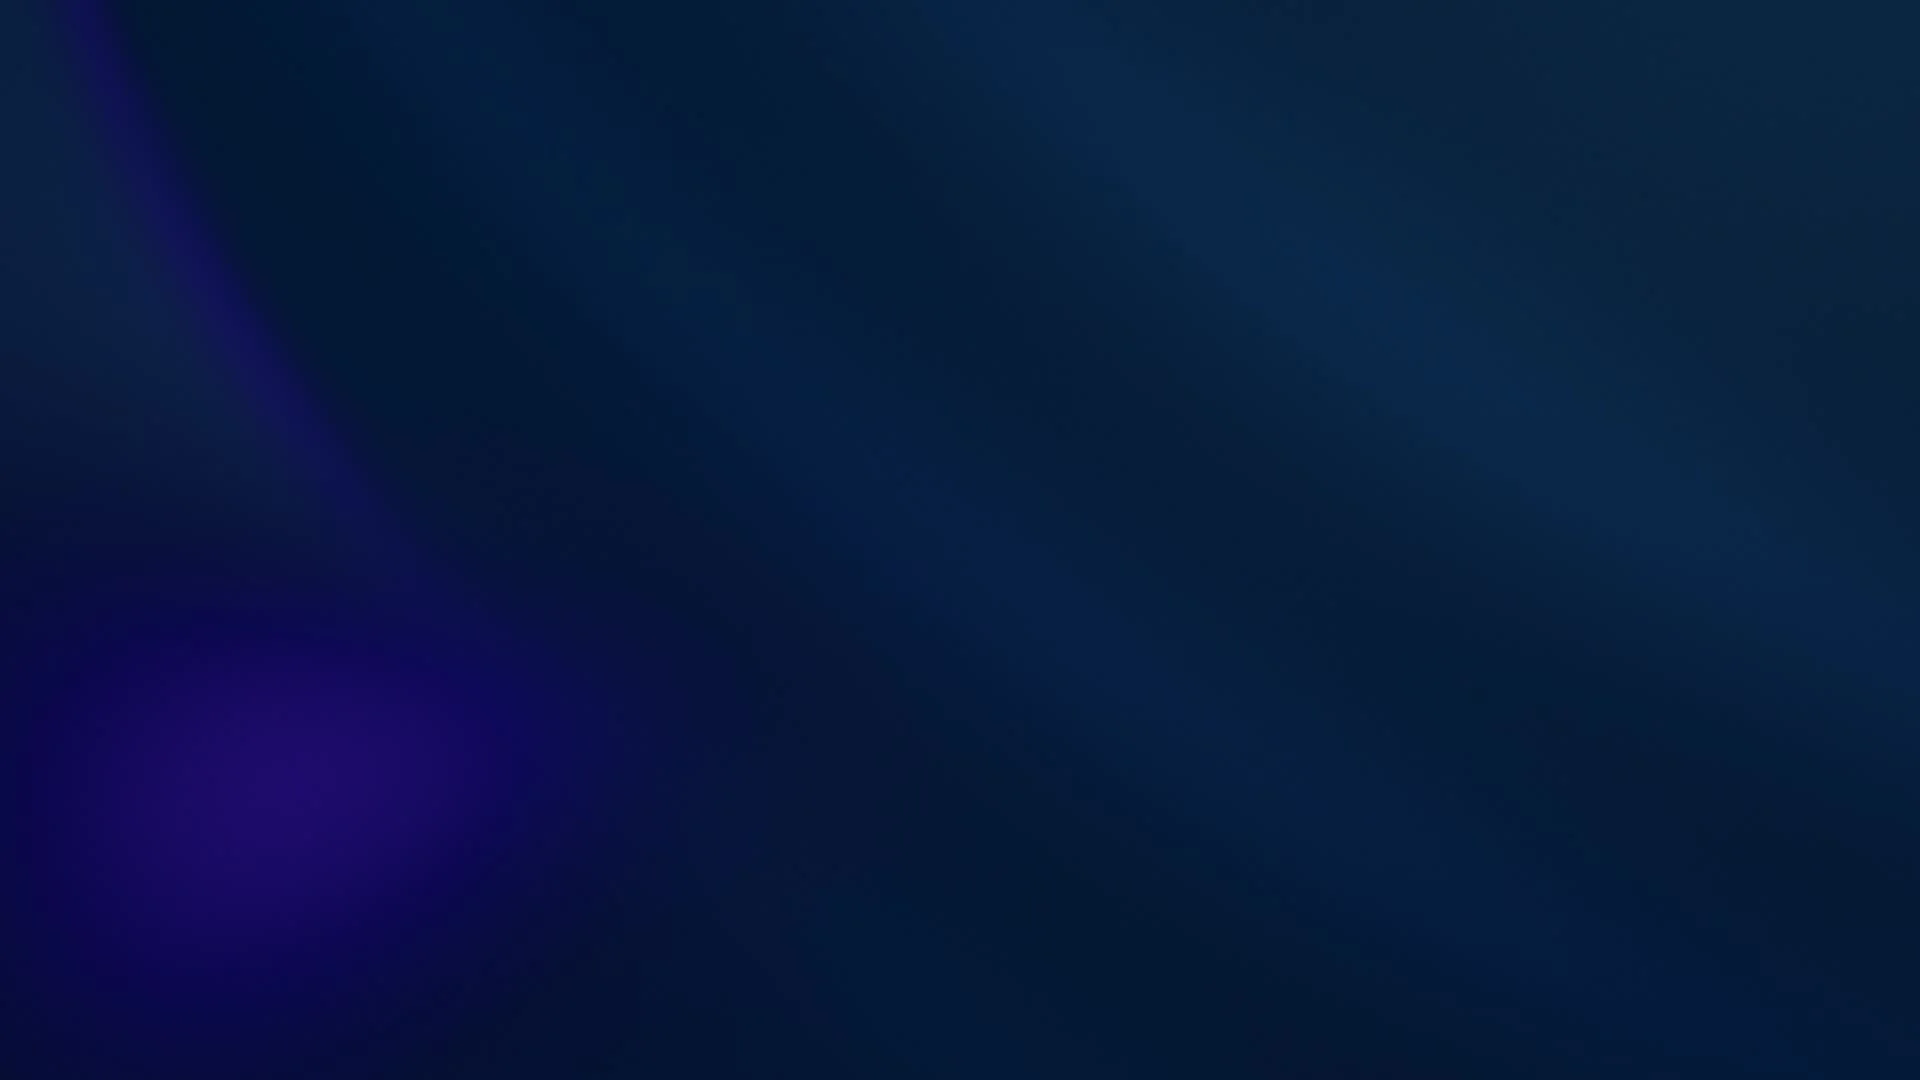 Blue Glow Background | Stock Video | Pond5